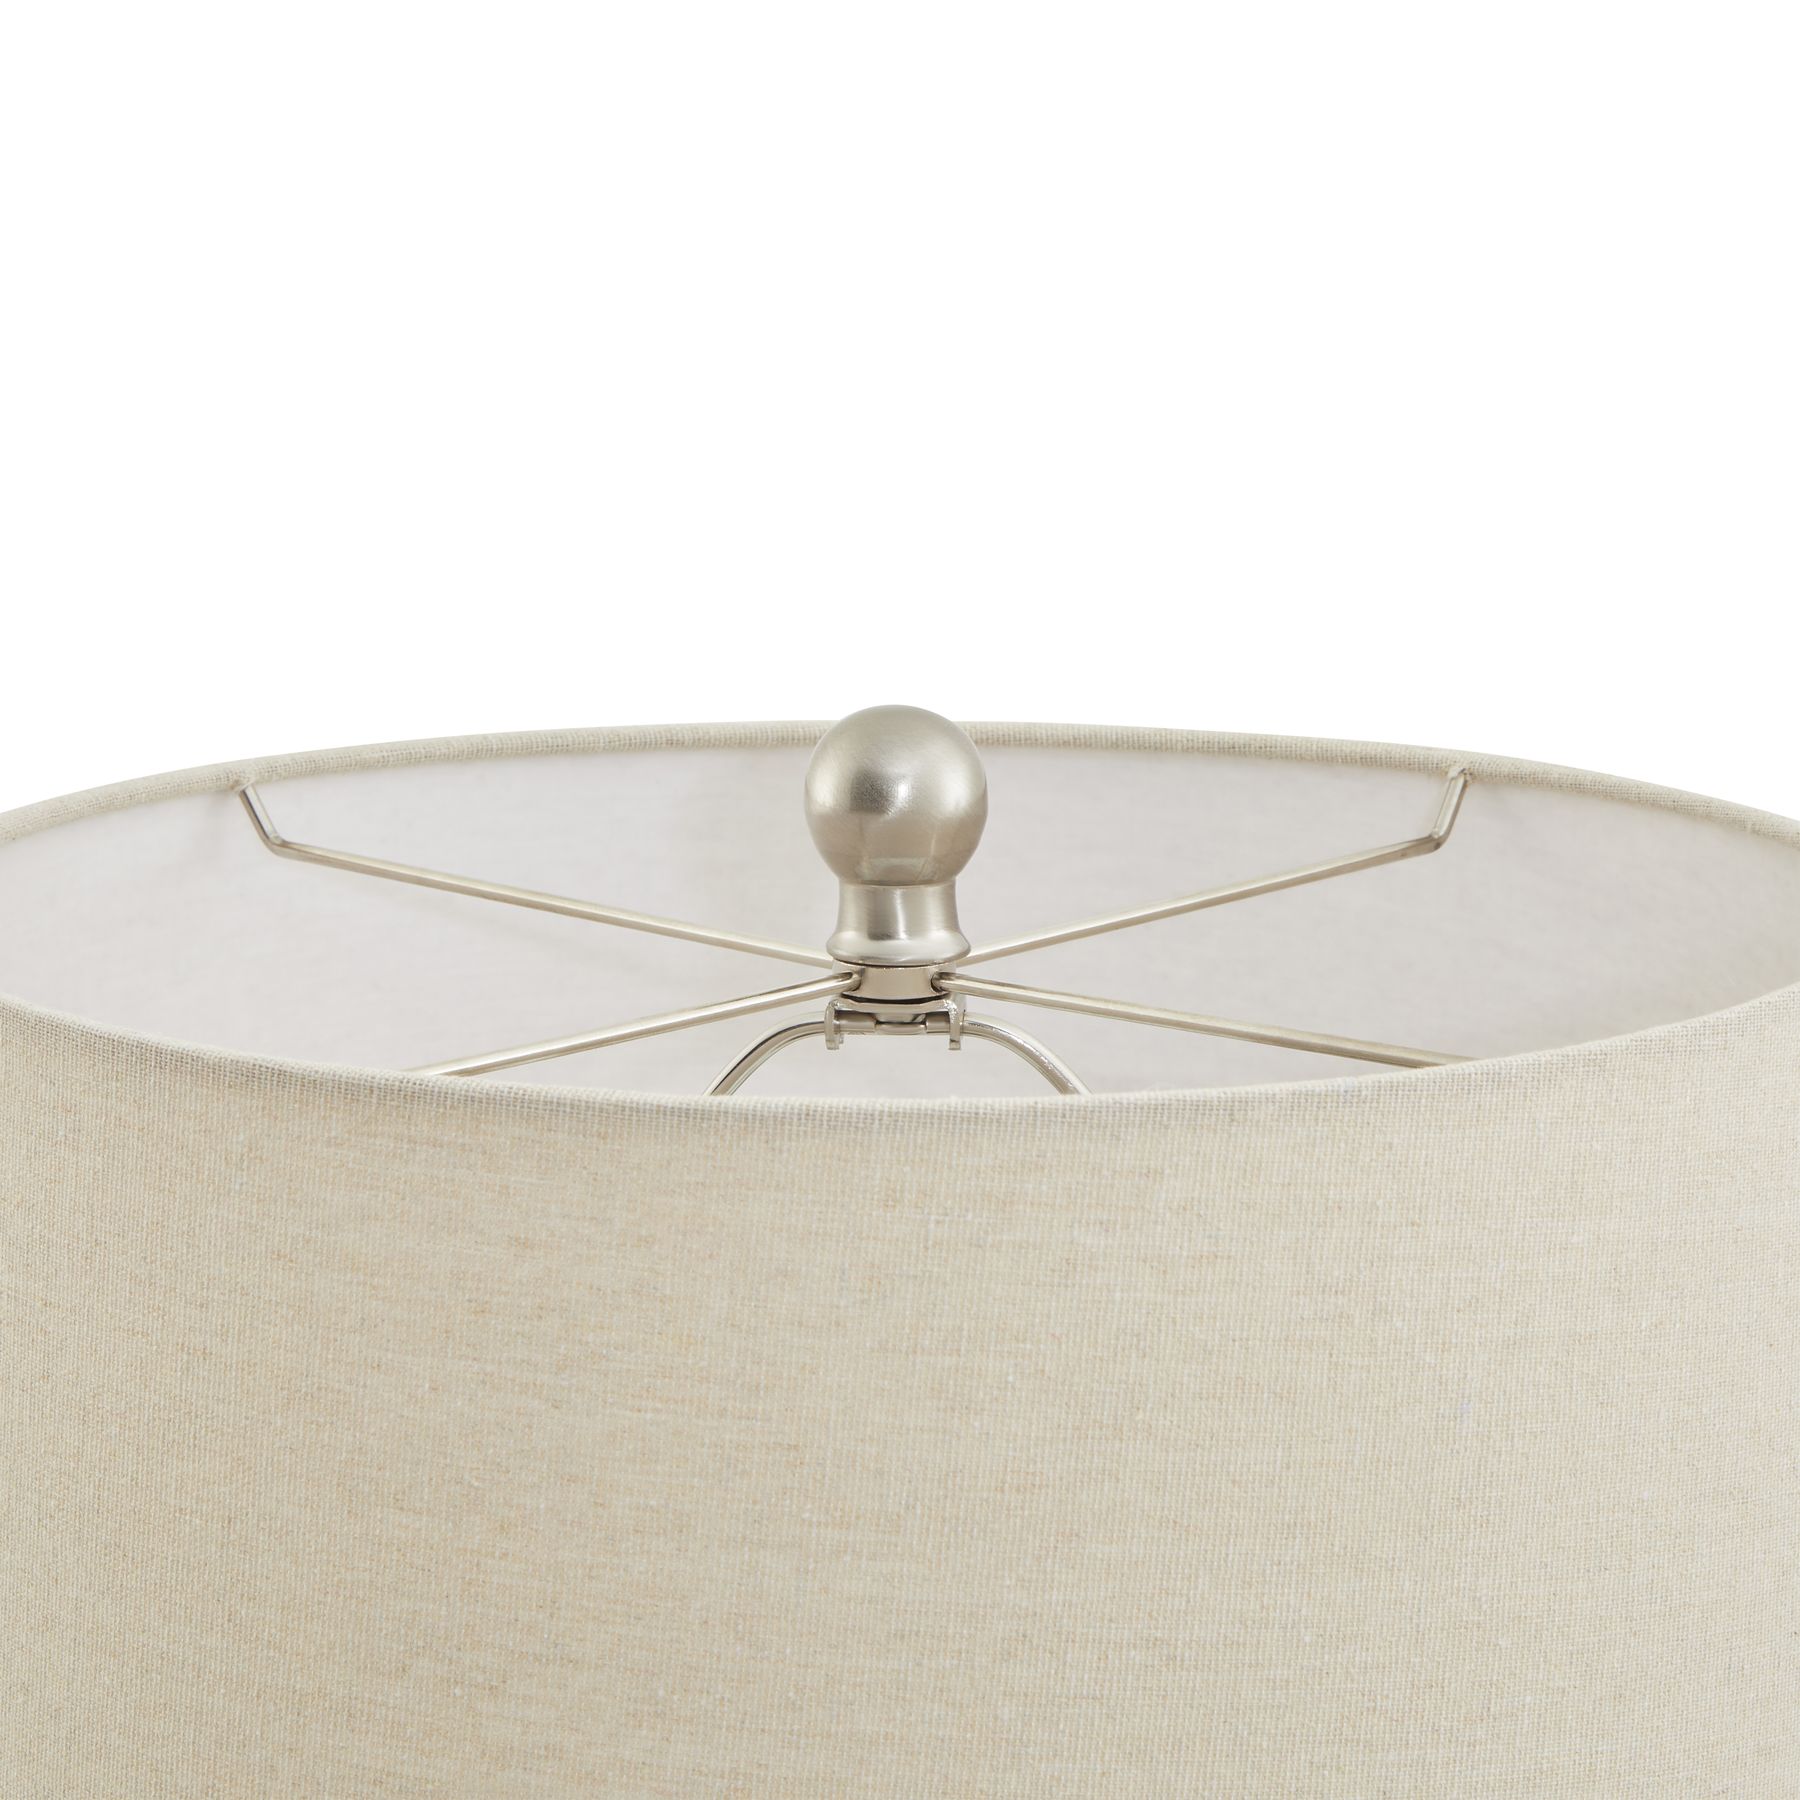 Lattice Ceramic Table Lamp With Linen Shade - Image 3